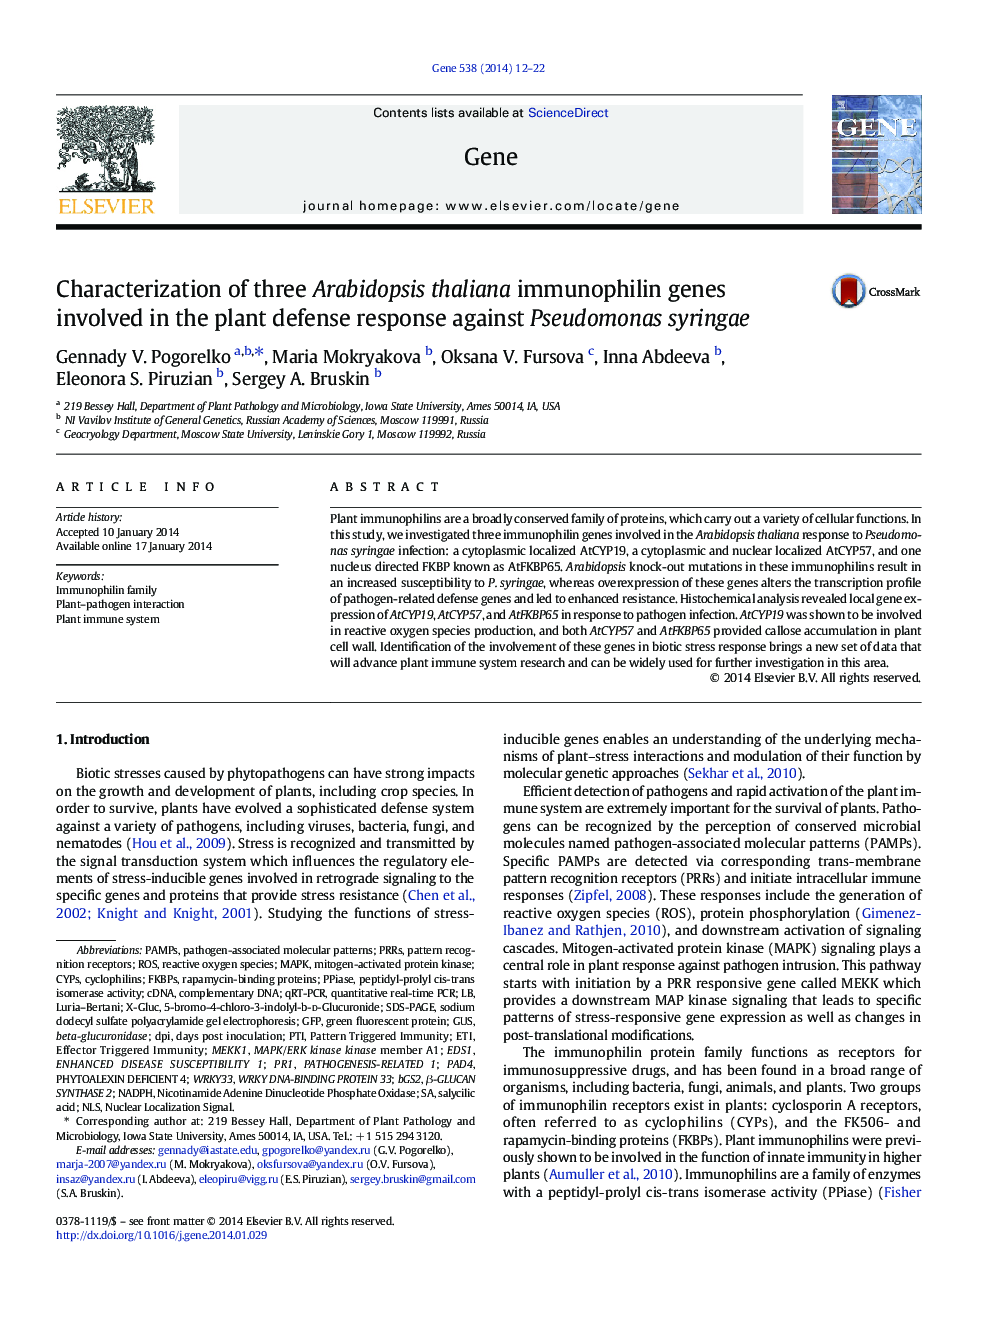 Characterization of three Arabidopsis thaliana immunophilin genes involved in the plant defense response against Pseudomonas syringae